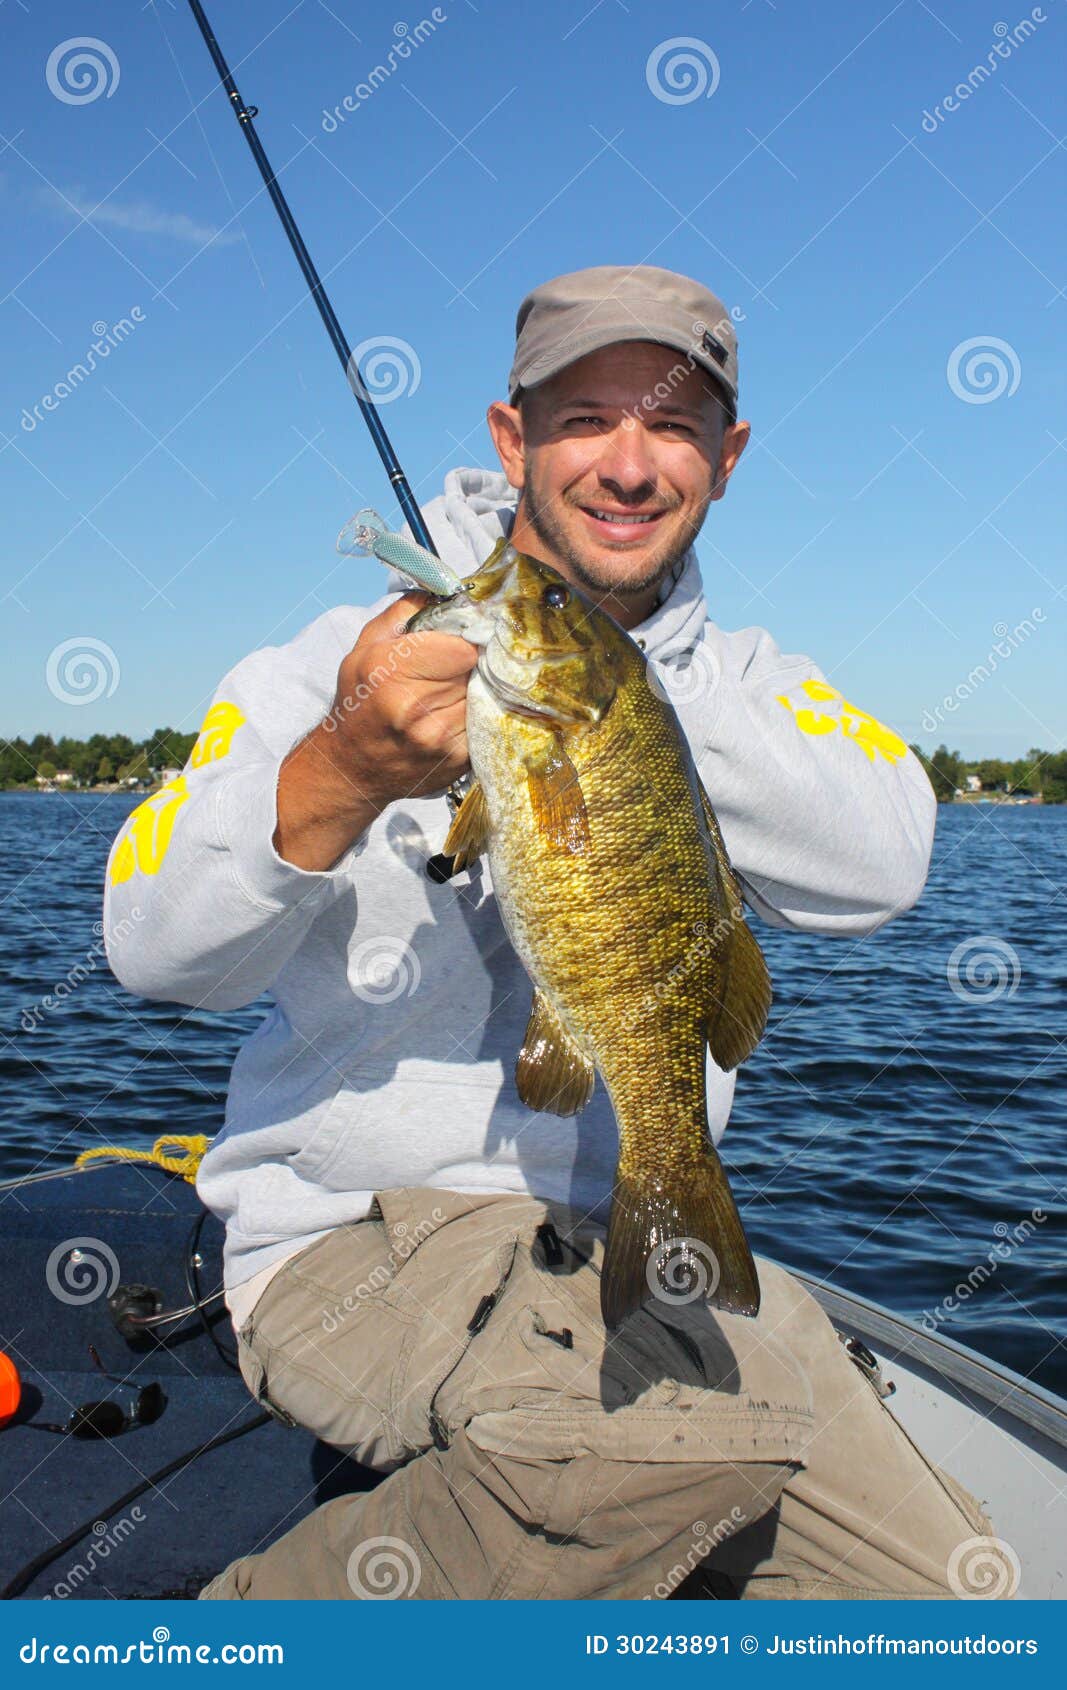 man fishing holding smallmouth bass